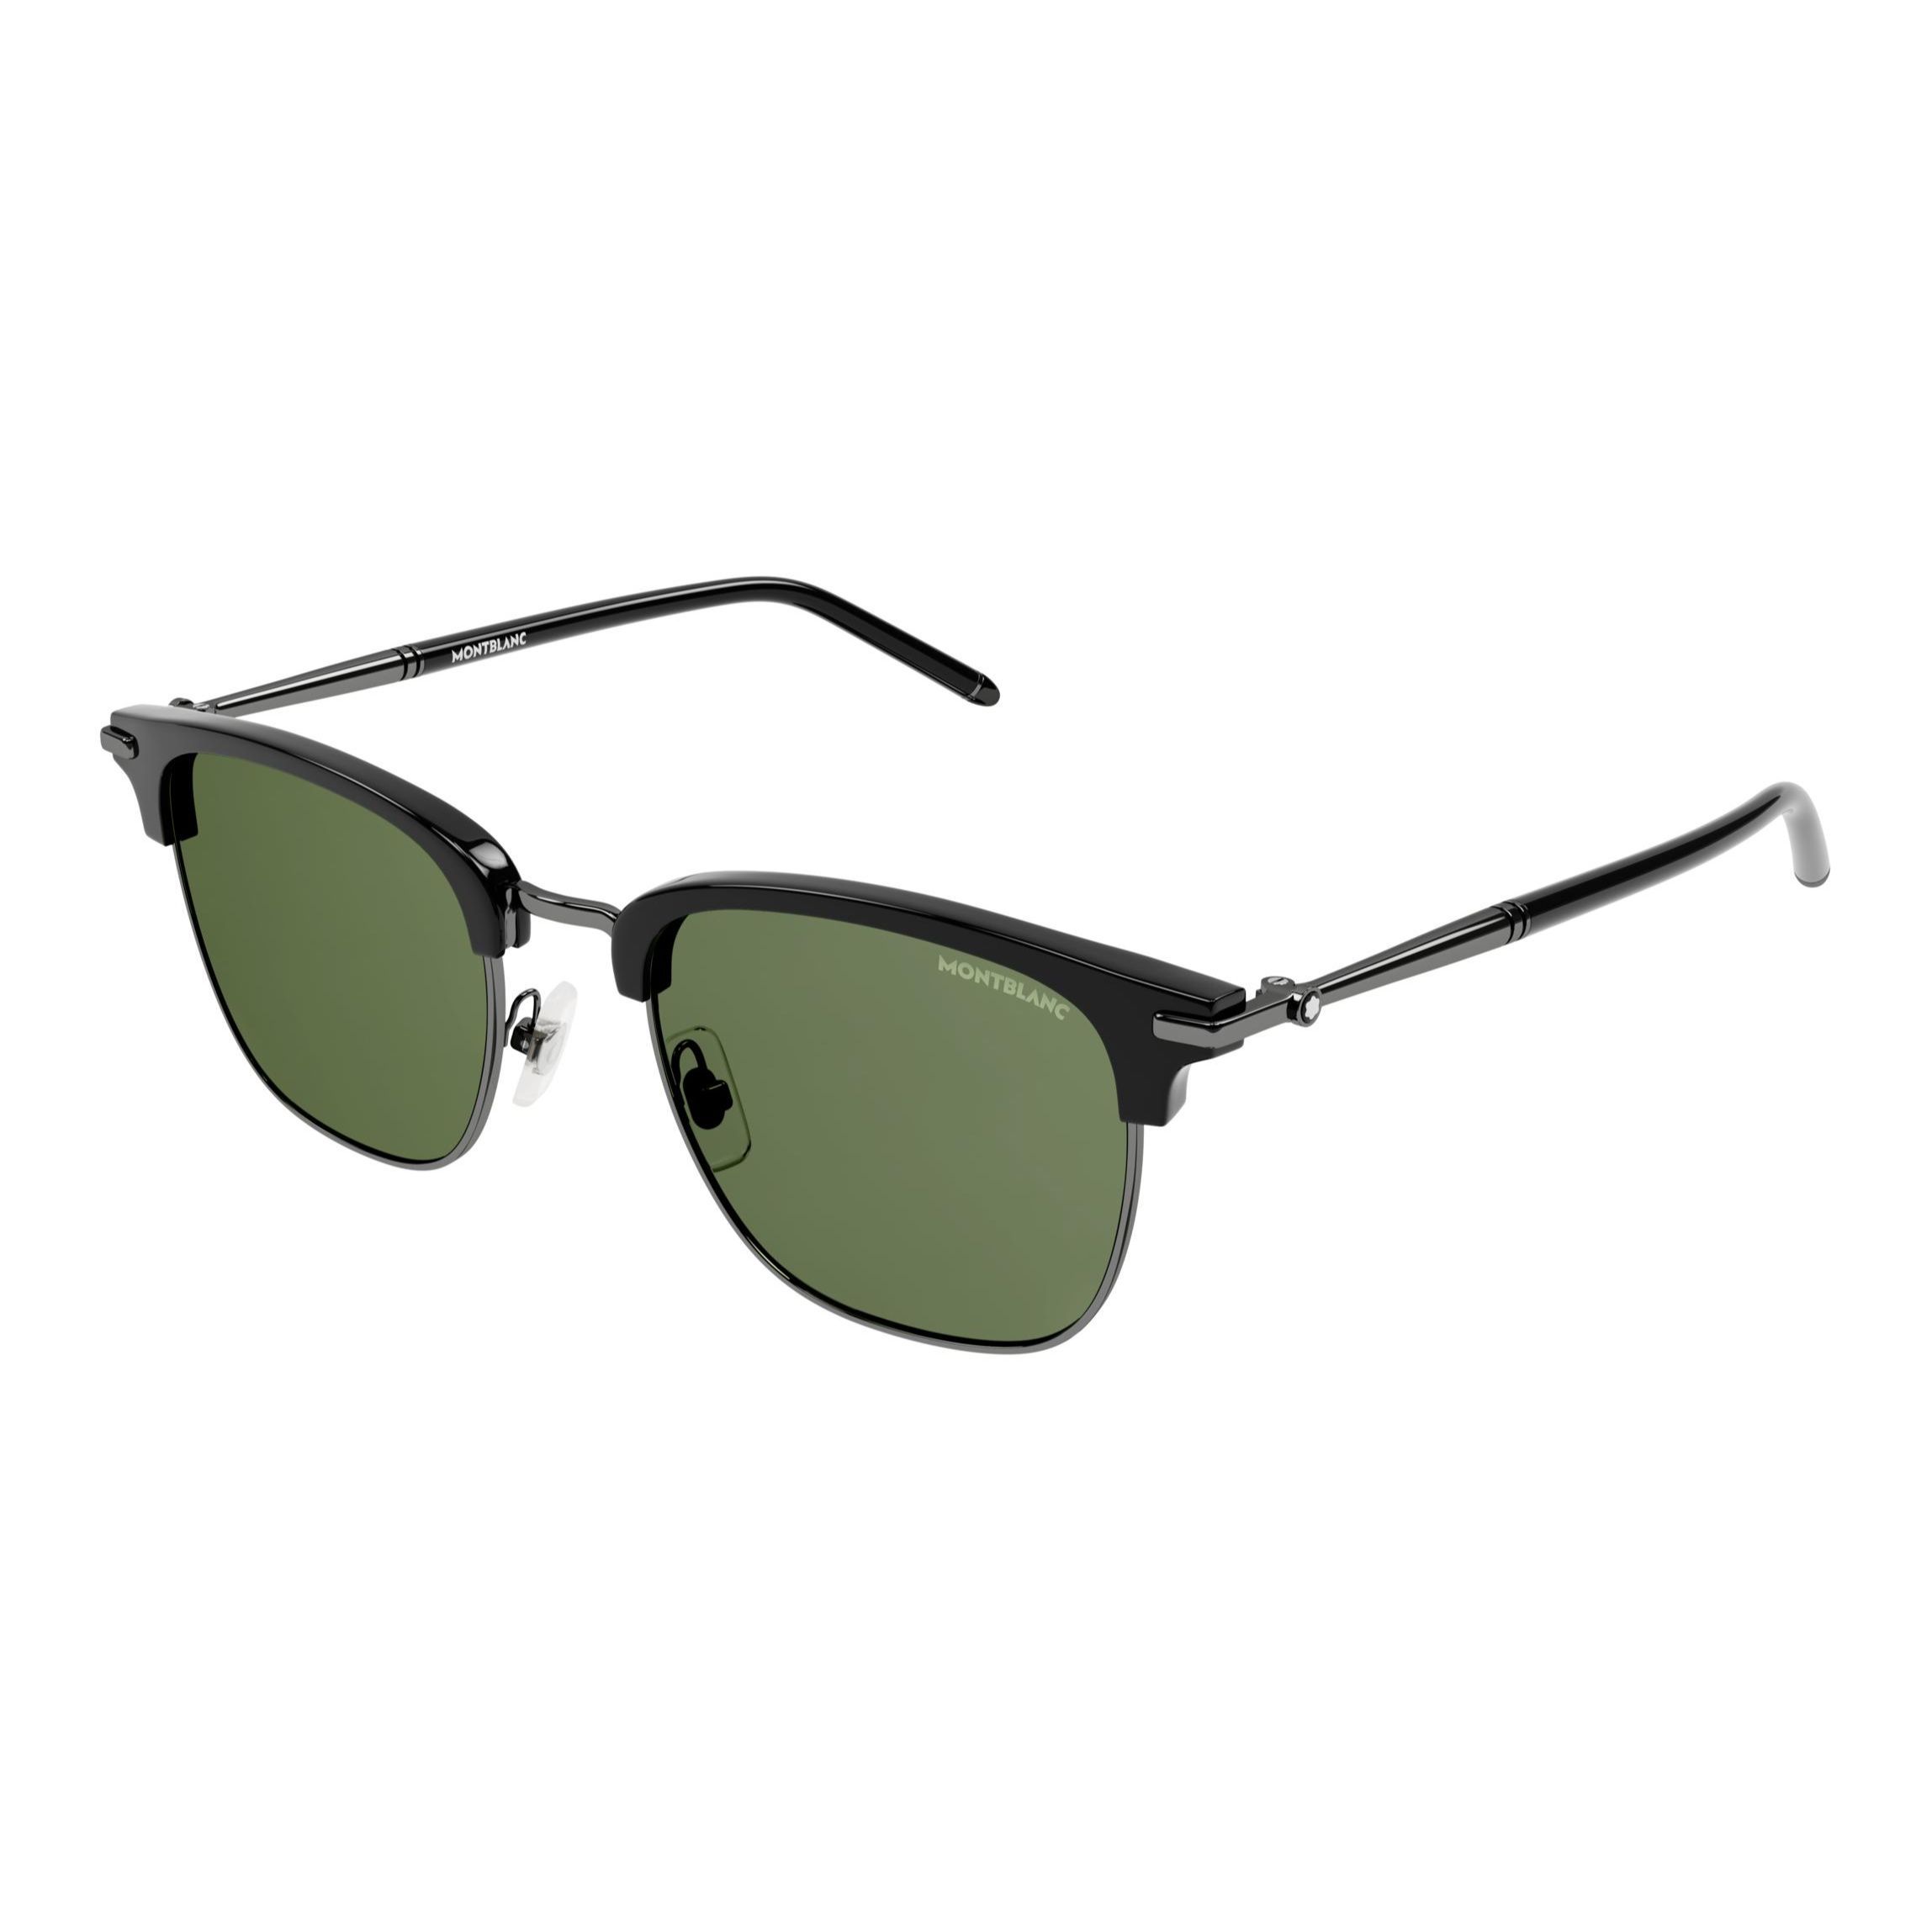 MB0242S Square Sunglasses 002 - size 50